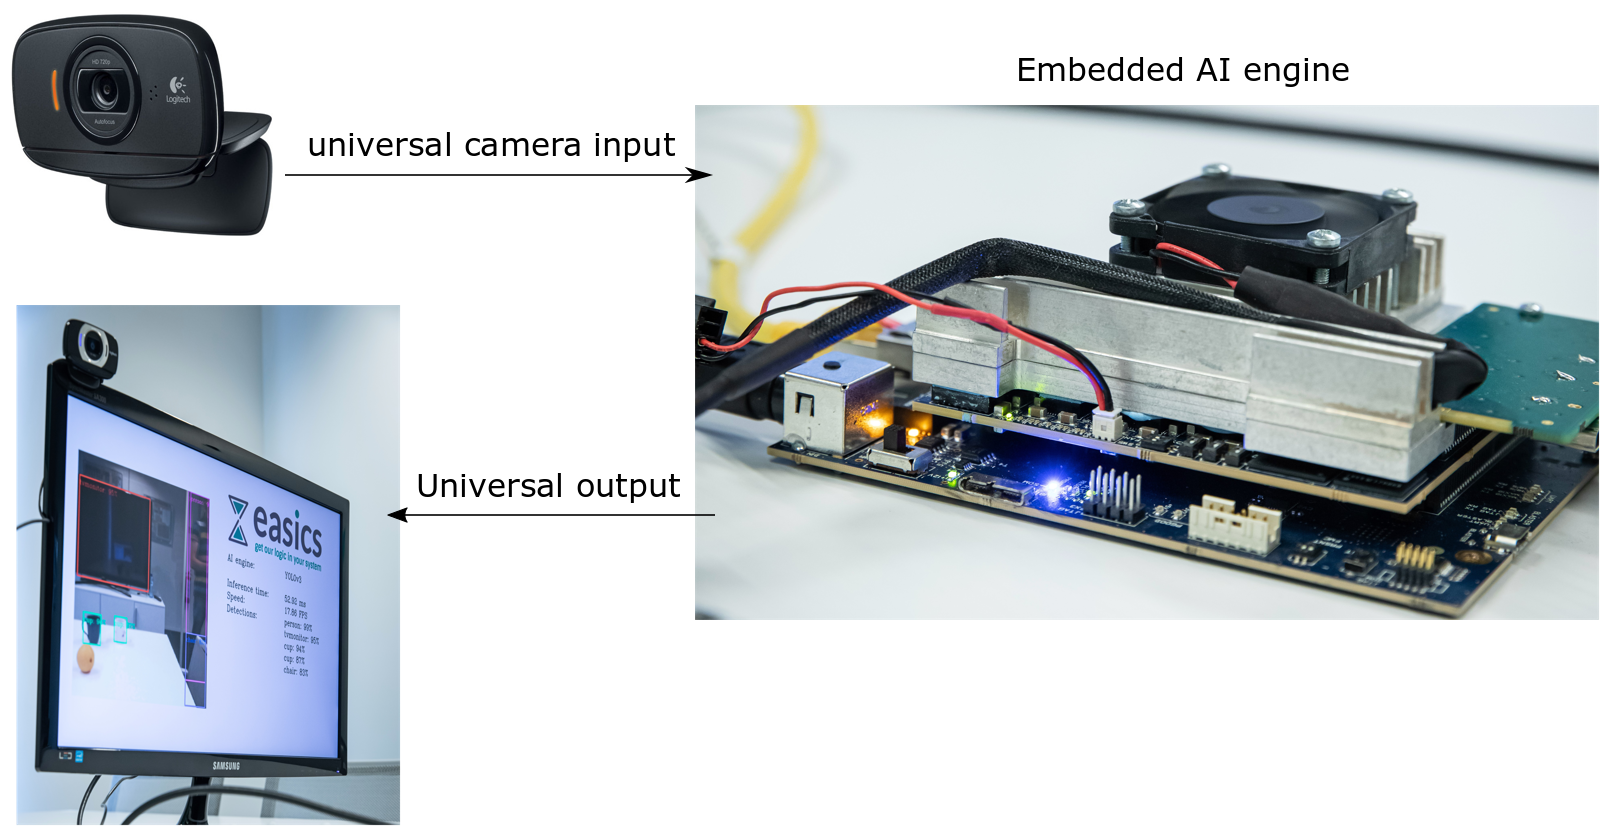 embedded AI engine demonstrator